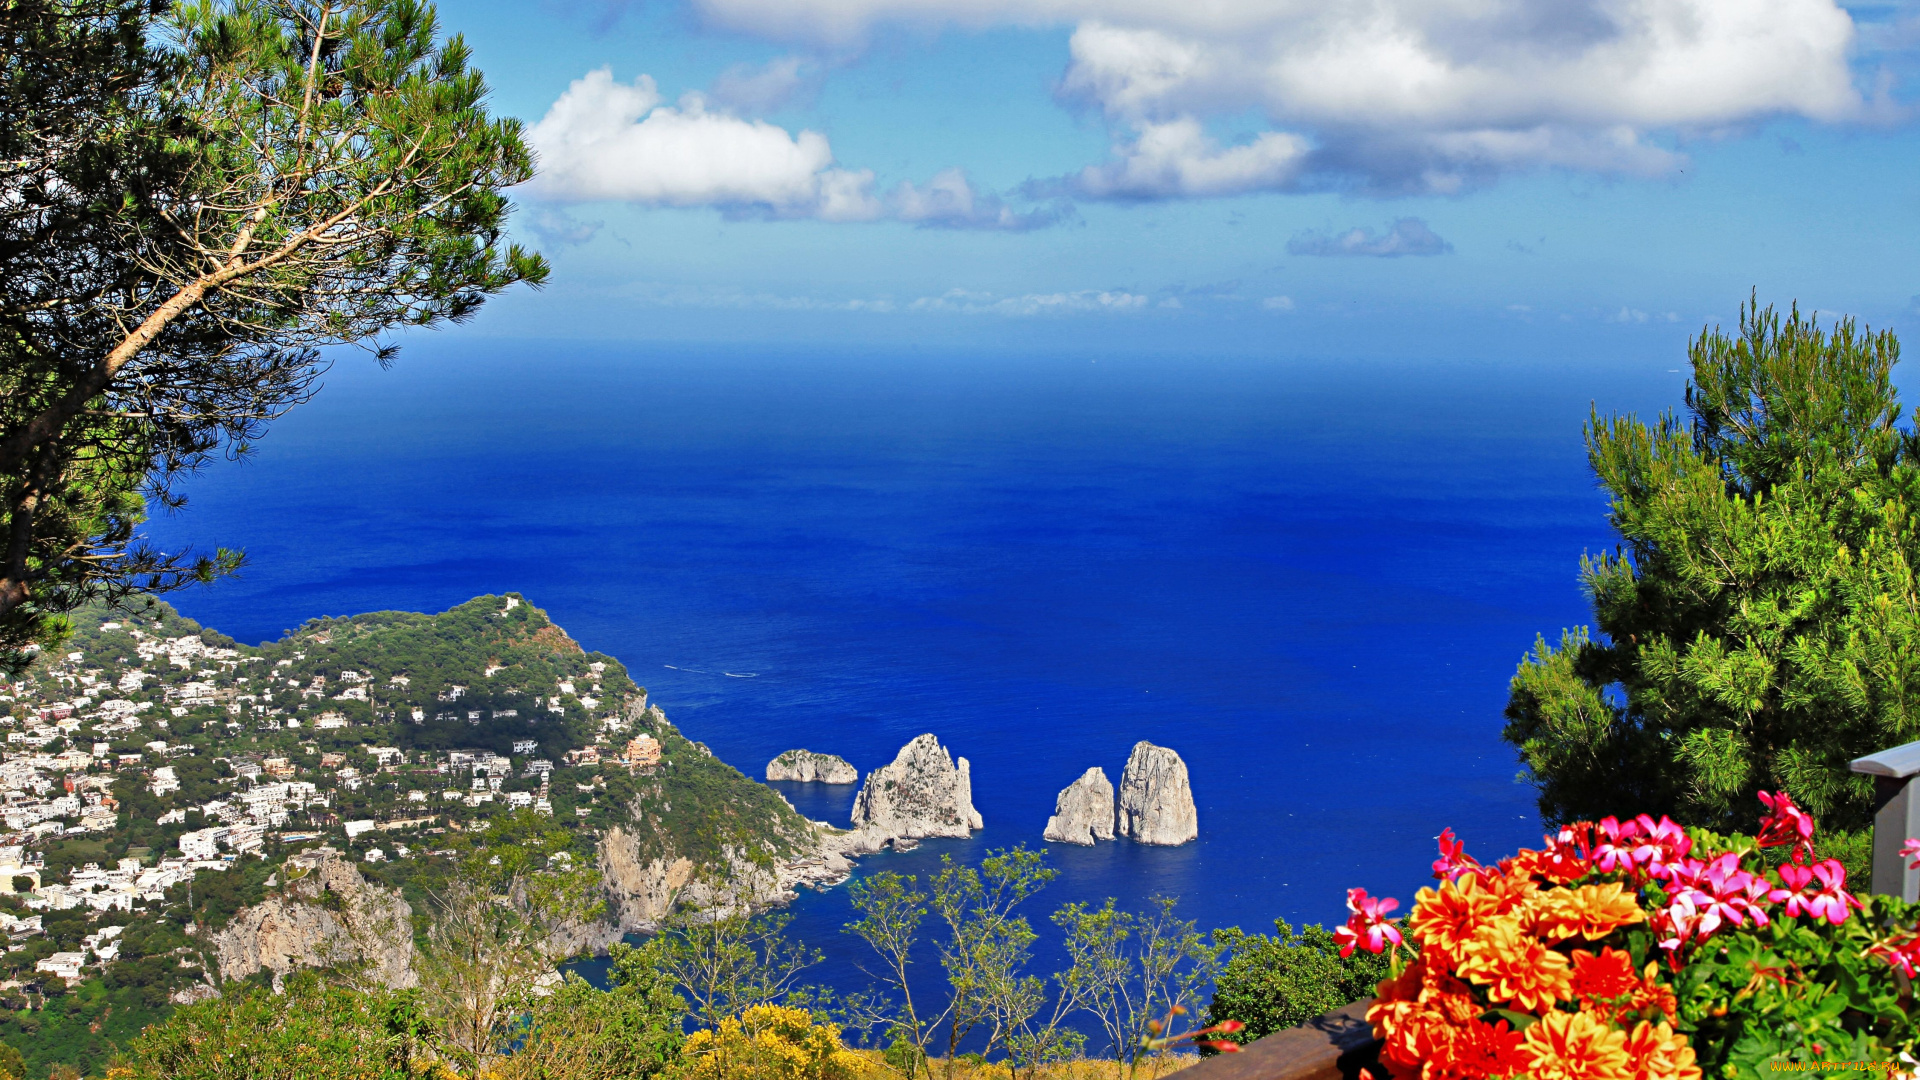 anacapri, capri, italy, природа, побережье, анакапри, капри, италия, море, цветы, деревья, скалы, панорама